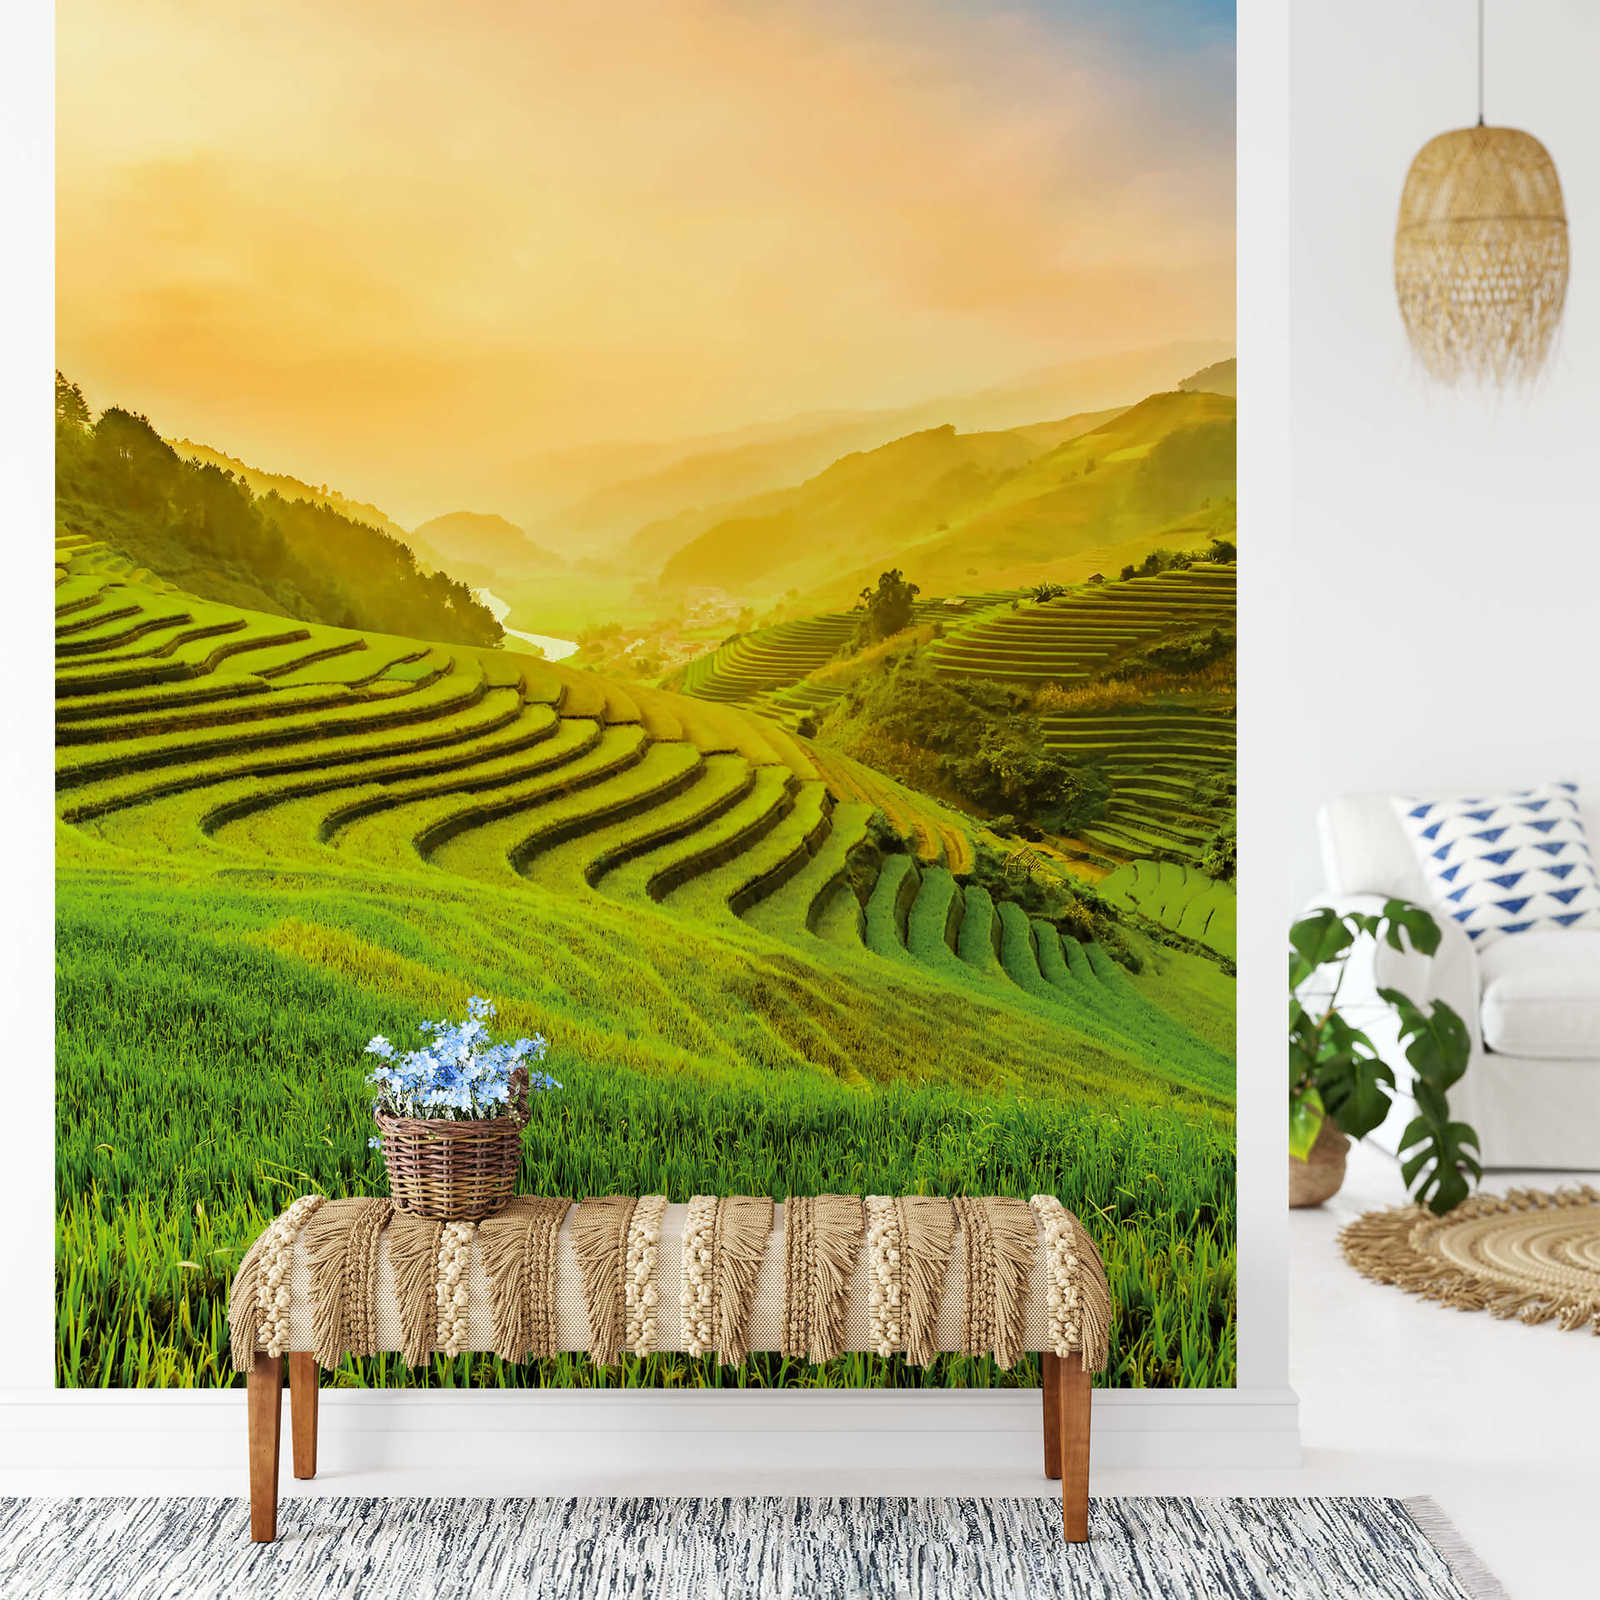             Vietnam photo wallpaper rice terraces in the sunlight
        